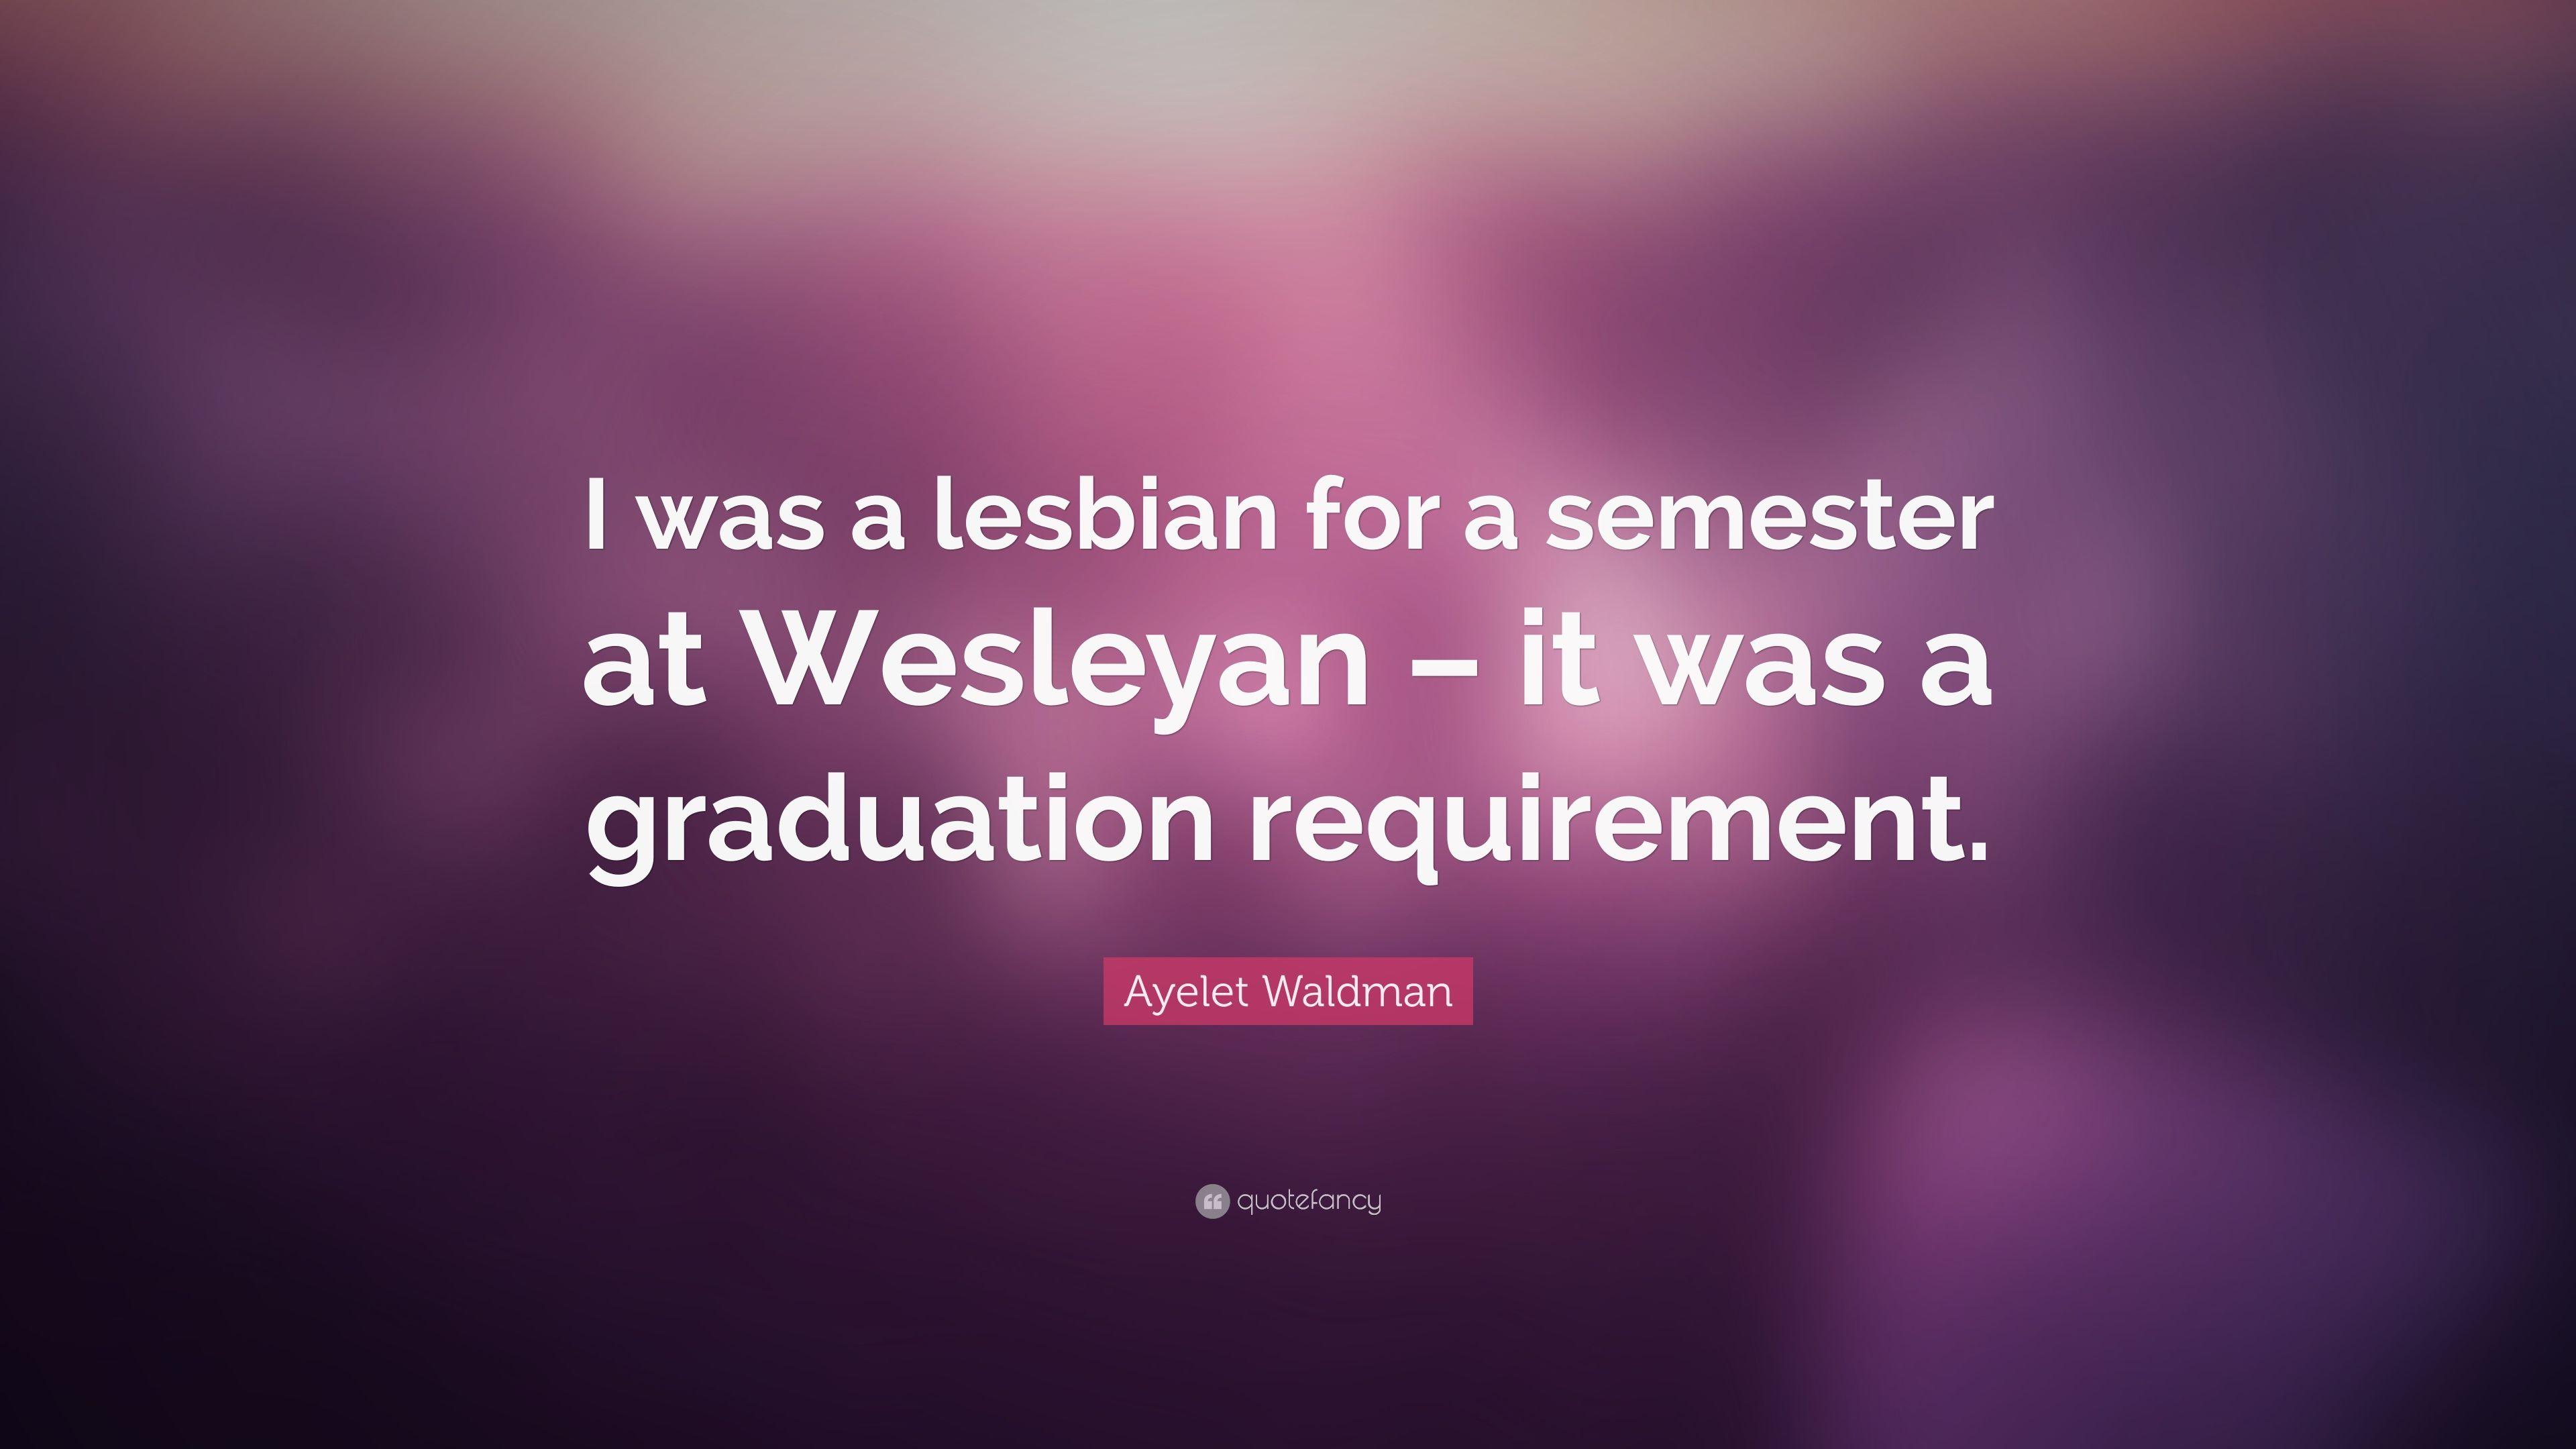 Ayelet Waldman Quote: “I was a lesbian for a semester at Wesleyan